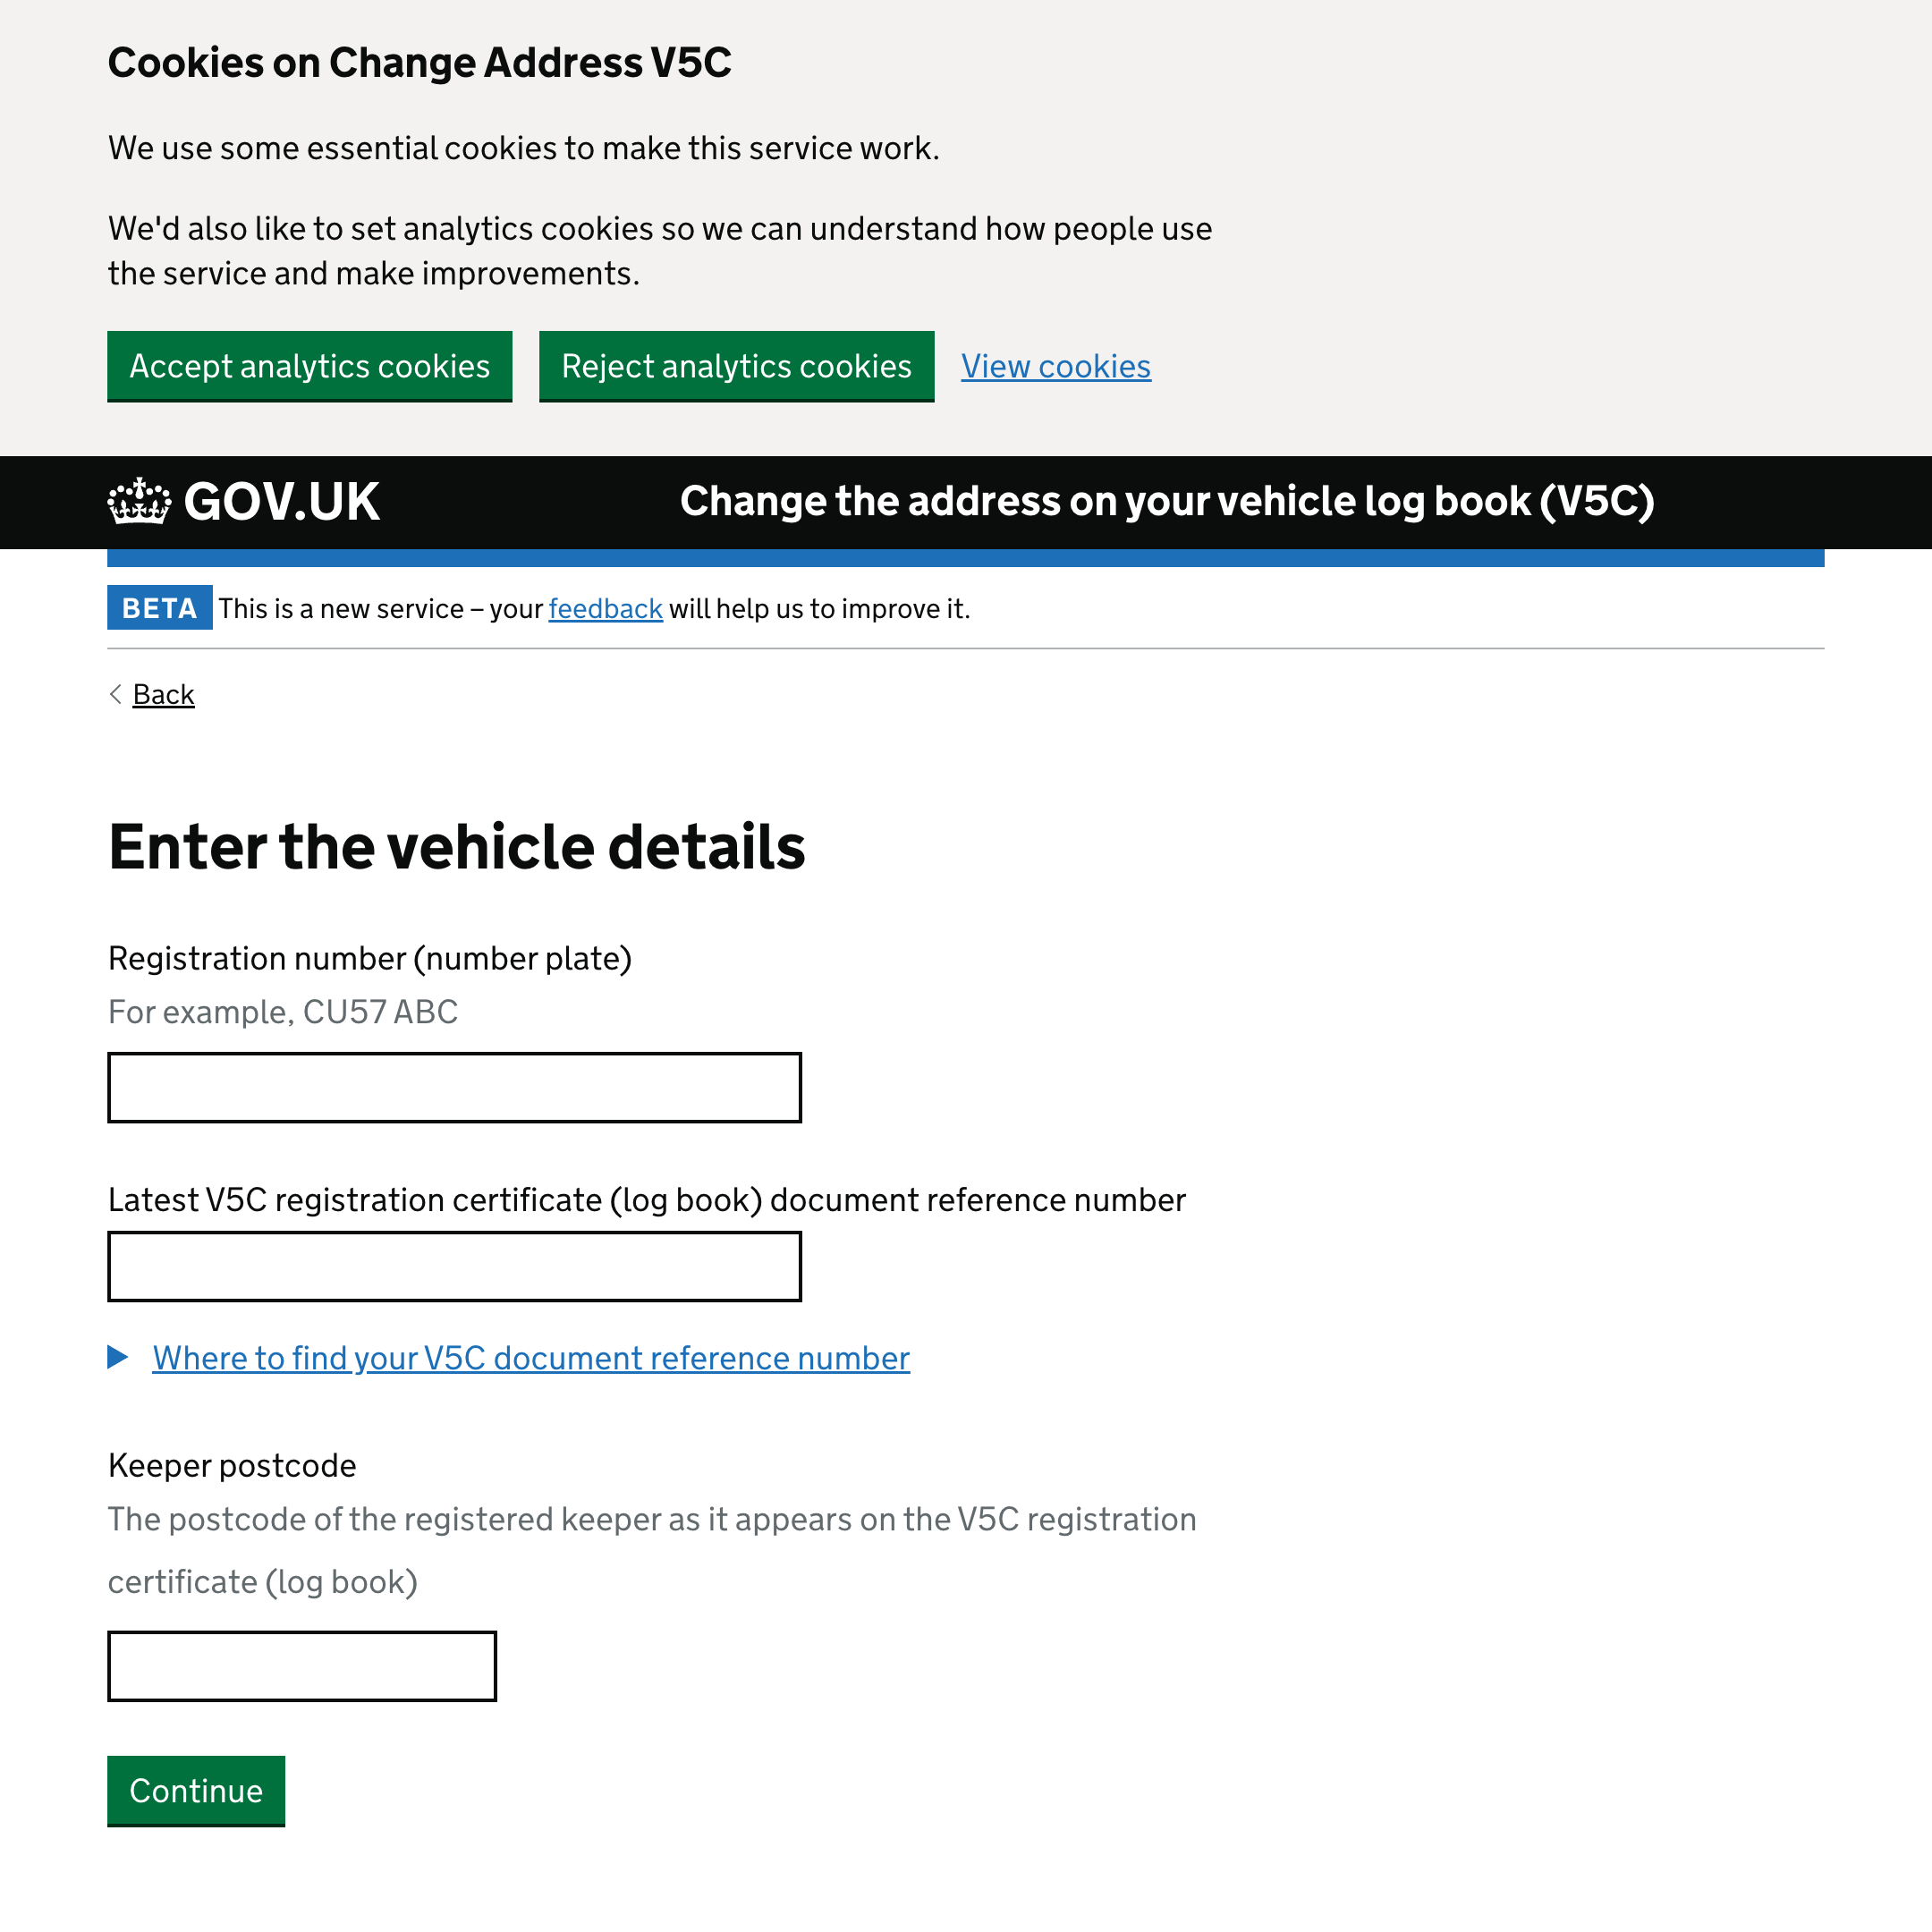 Change the address on your vehicle log book (V5C)